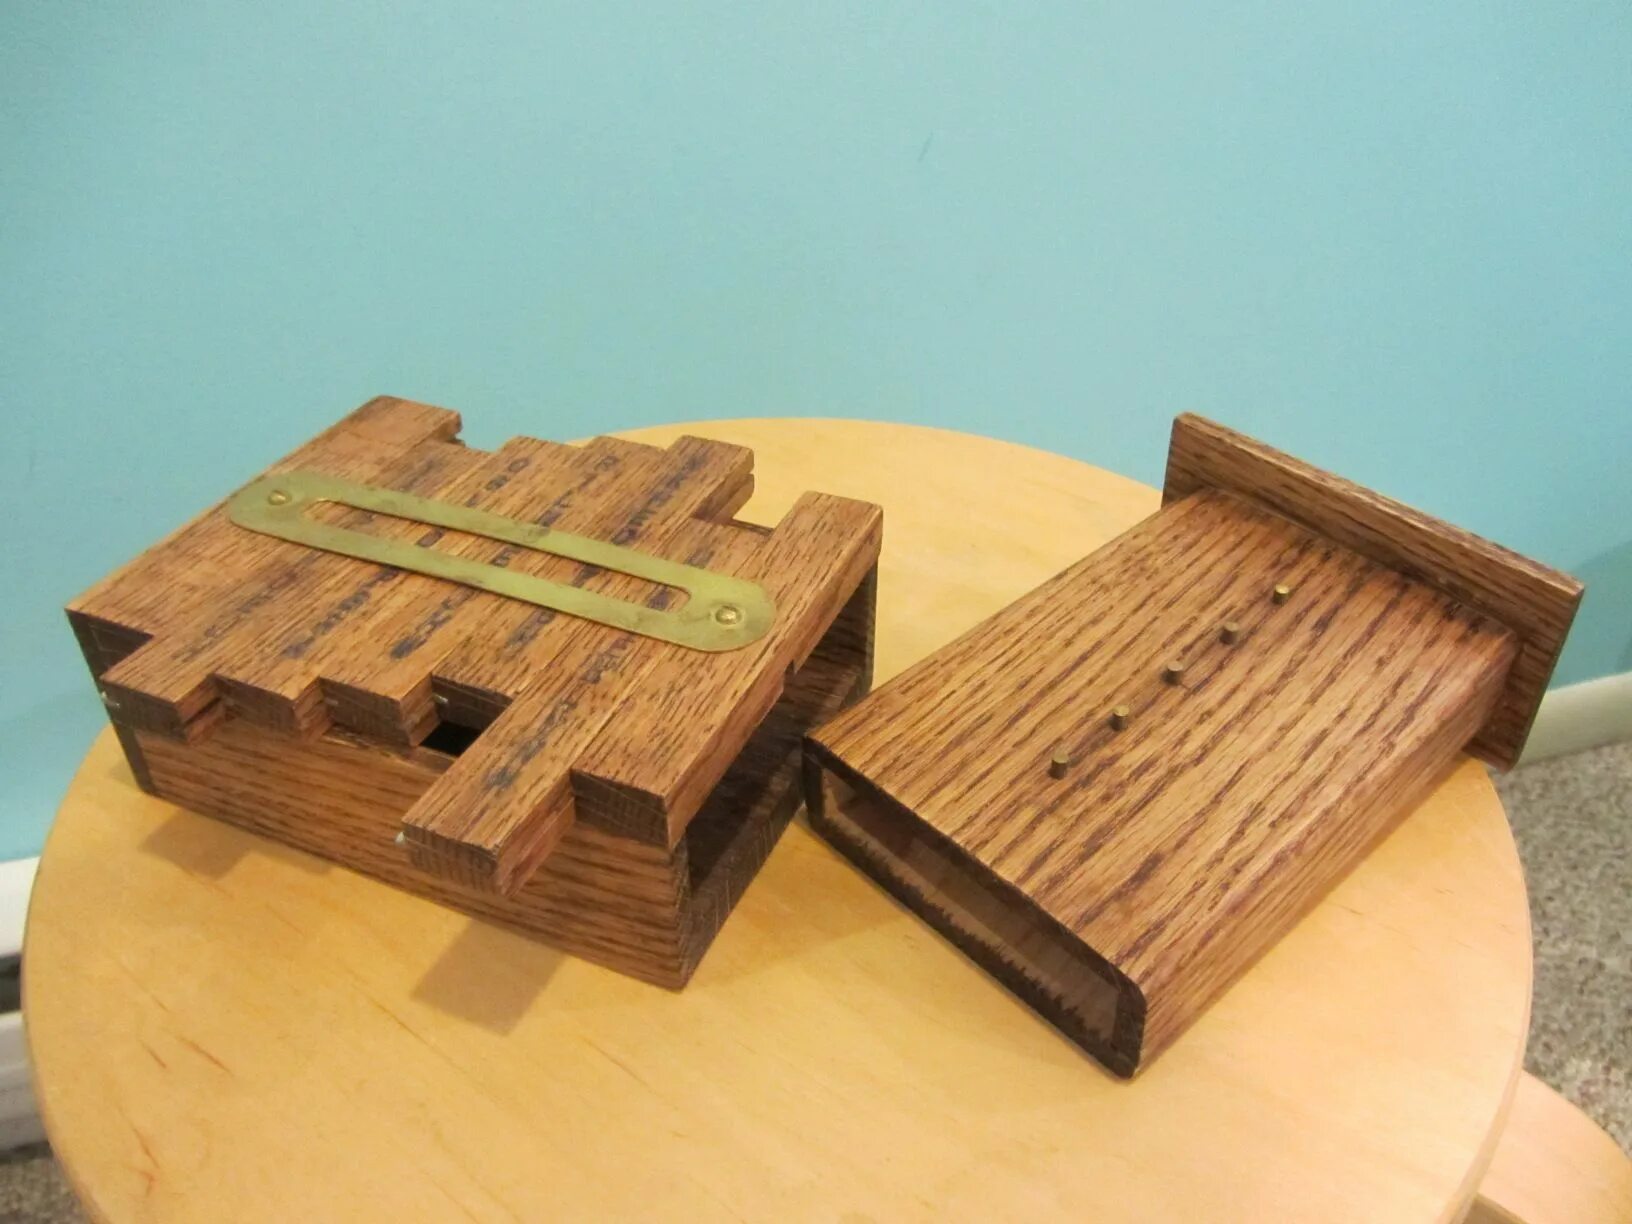 More wooden most wooden. Головоломка из дощечек. Pin Puzzle Box. Набор деревянных головоломок Wooden Box 3 инструкция. Simple Wooden Puzzle Box.